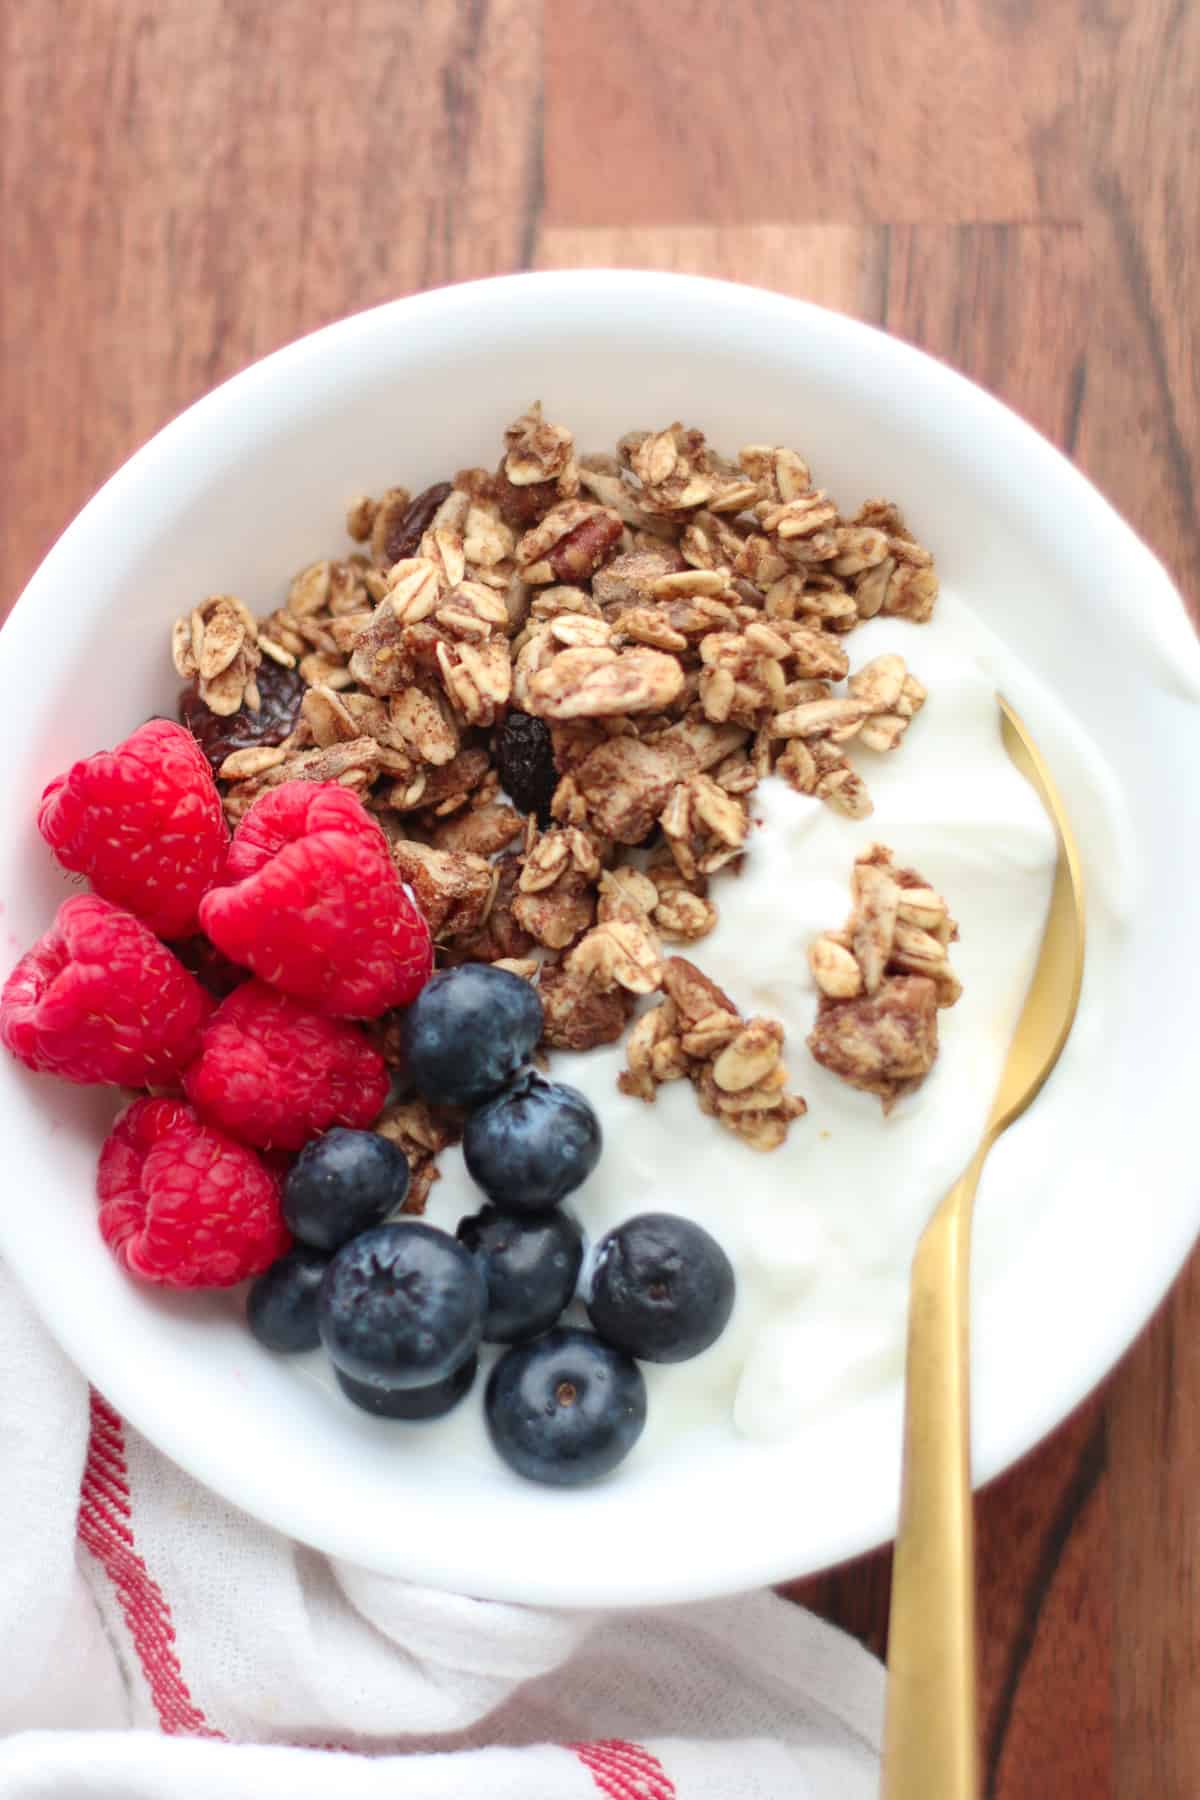 Yogurt topped with raspberries, blueberries, granola.